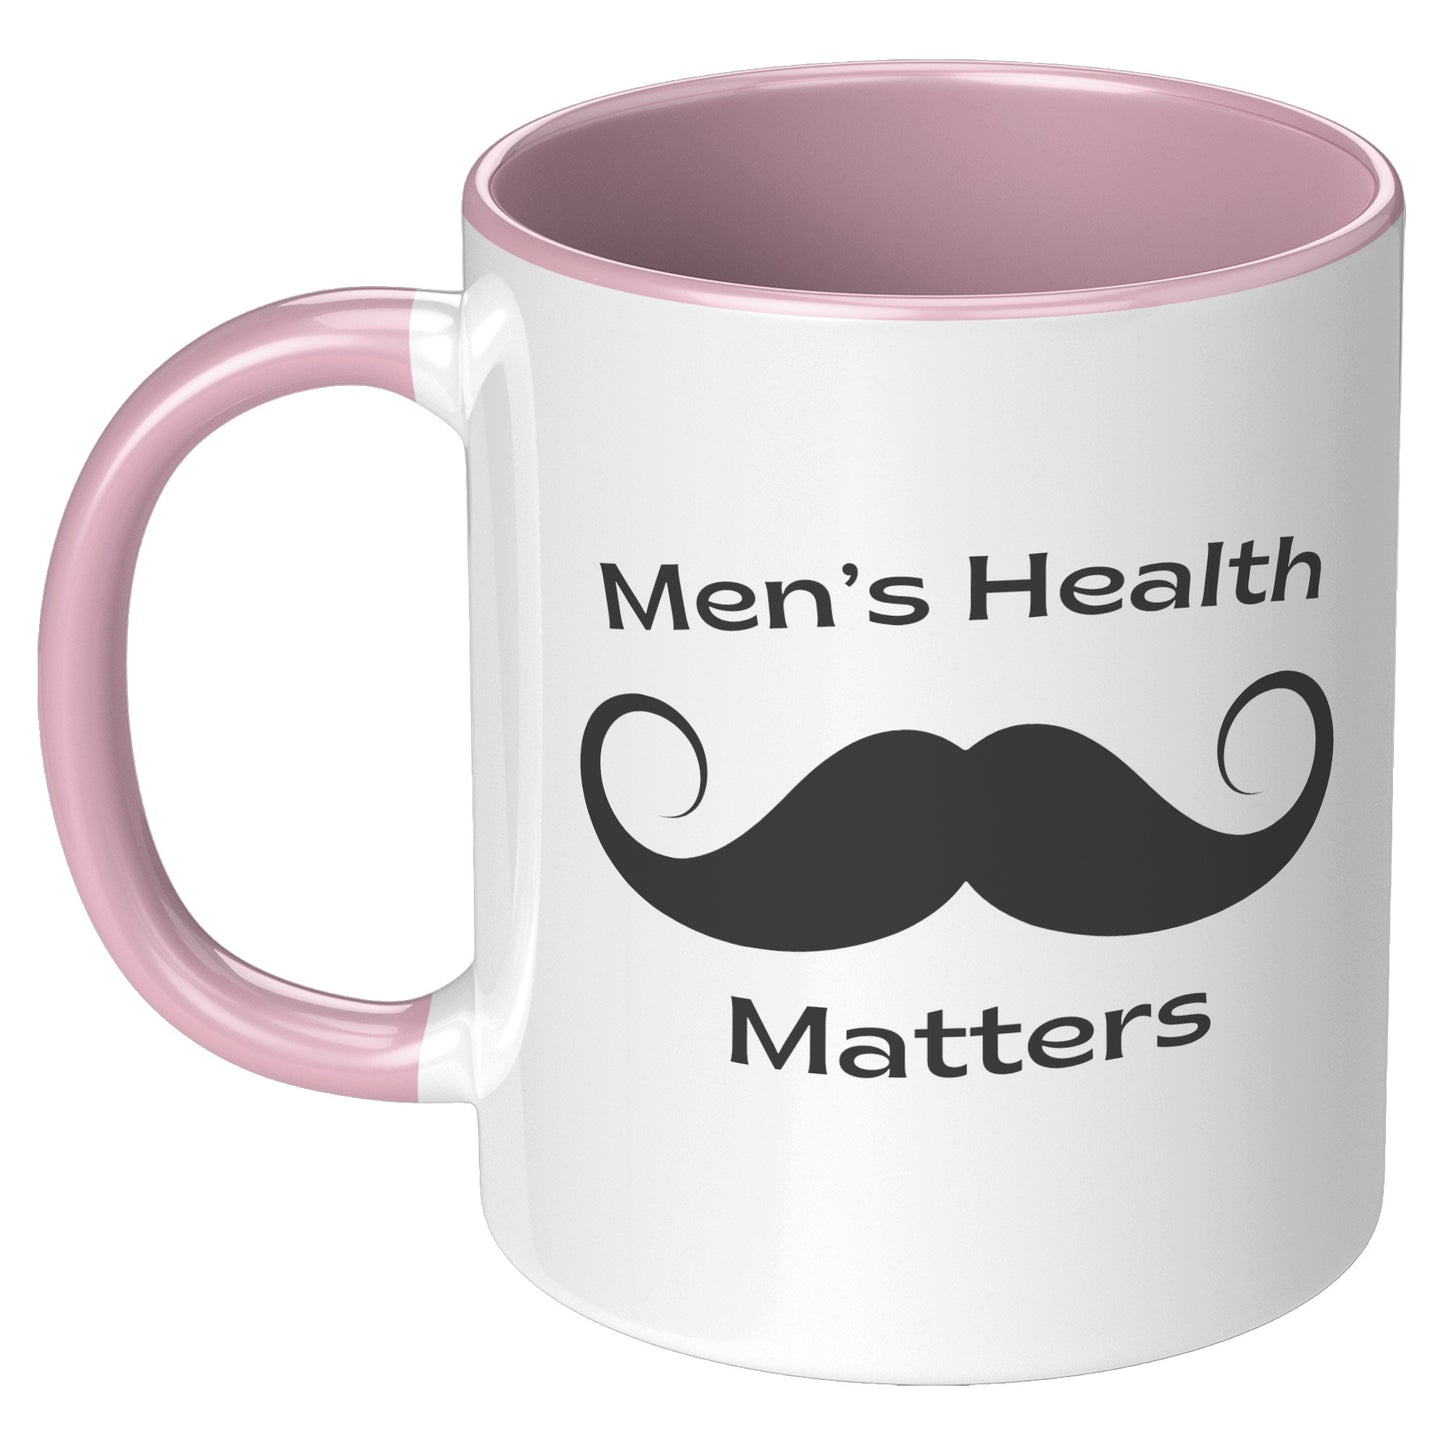 11oz Accent Mug Movember Men's Health Matters Left-Handed